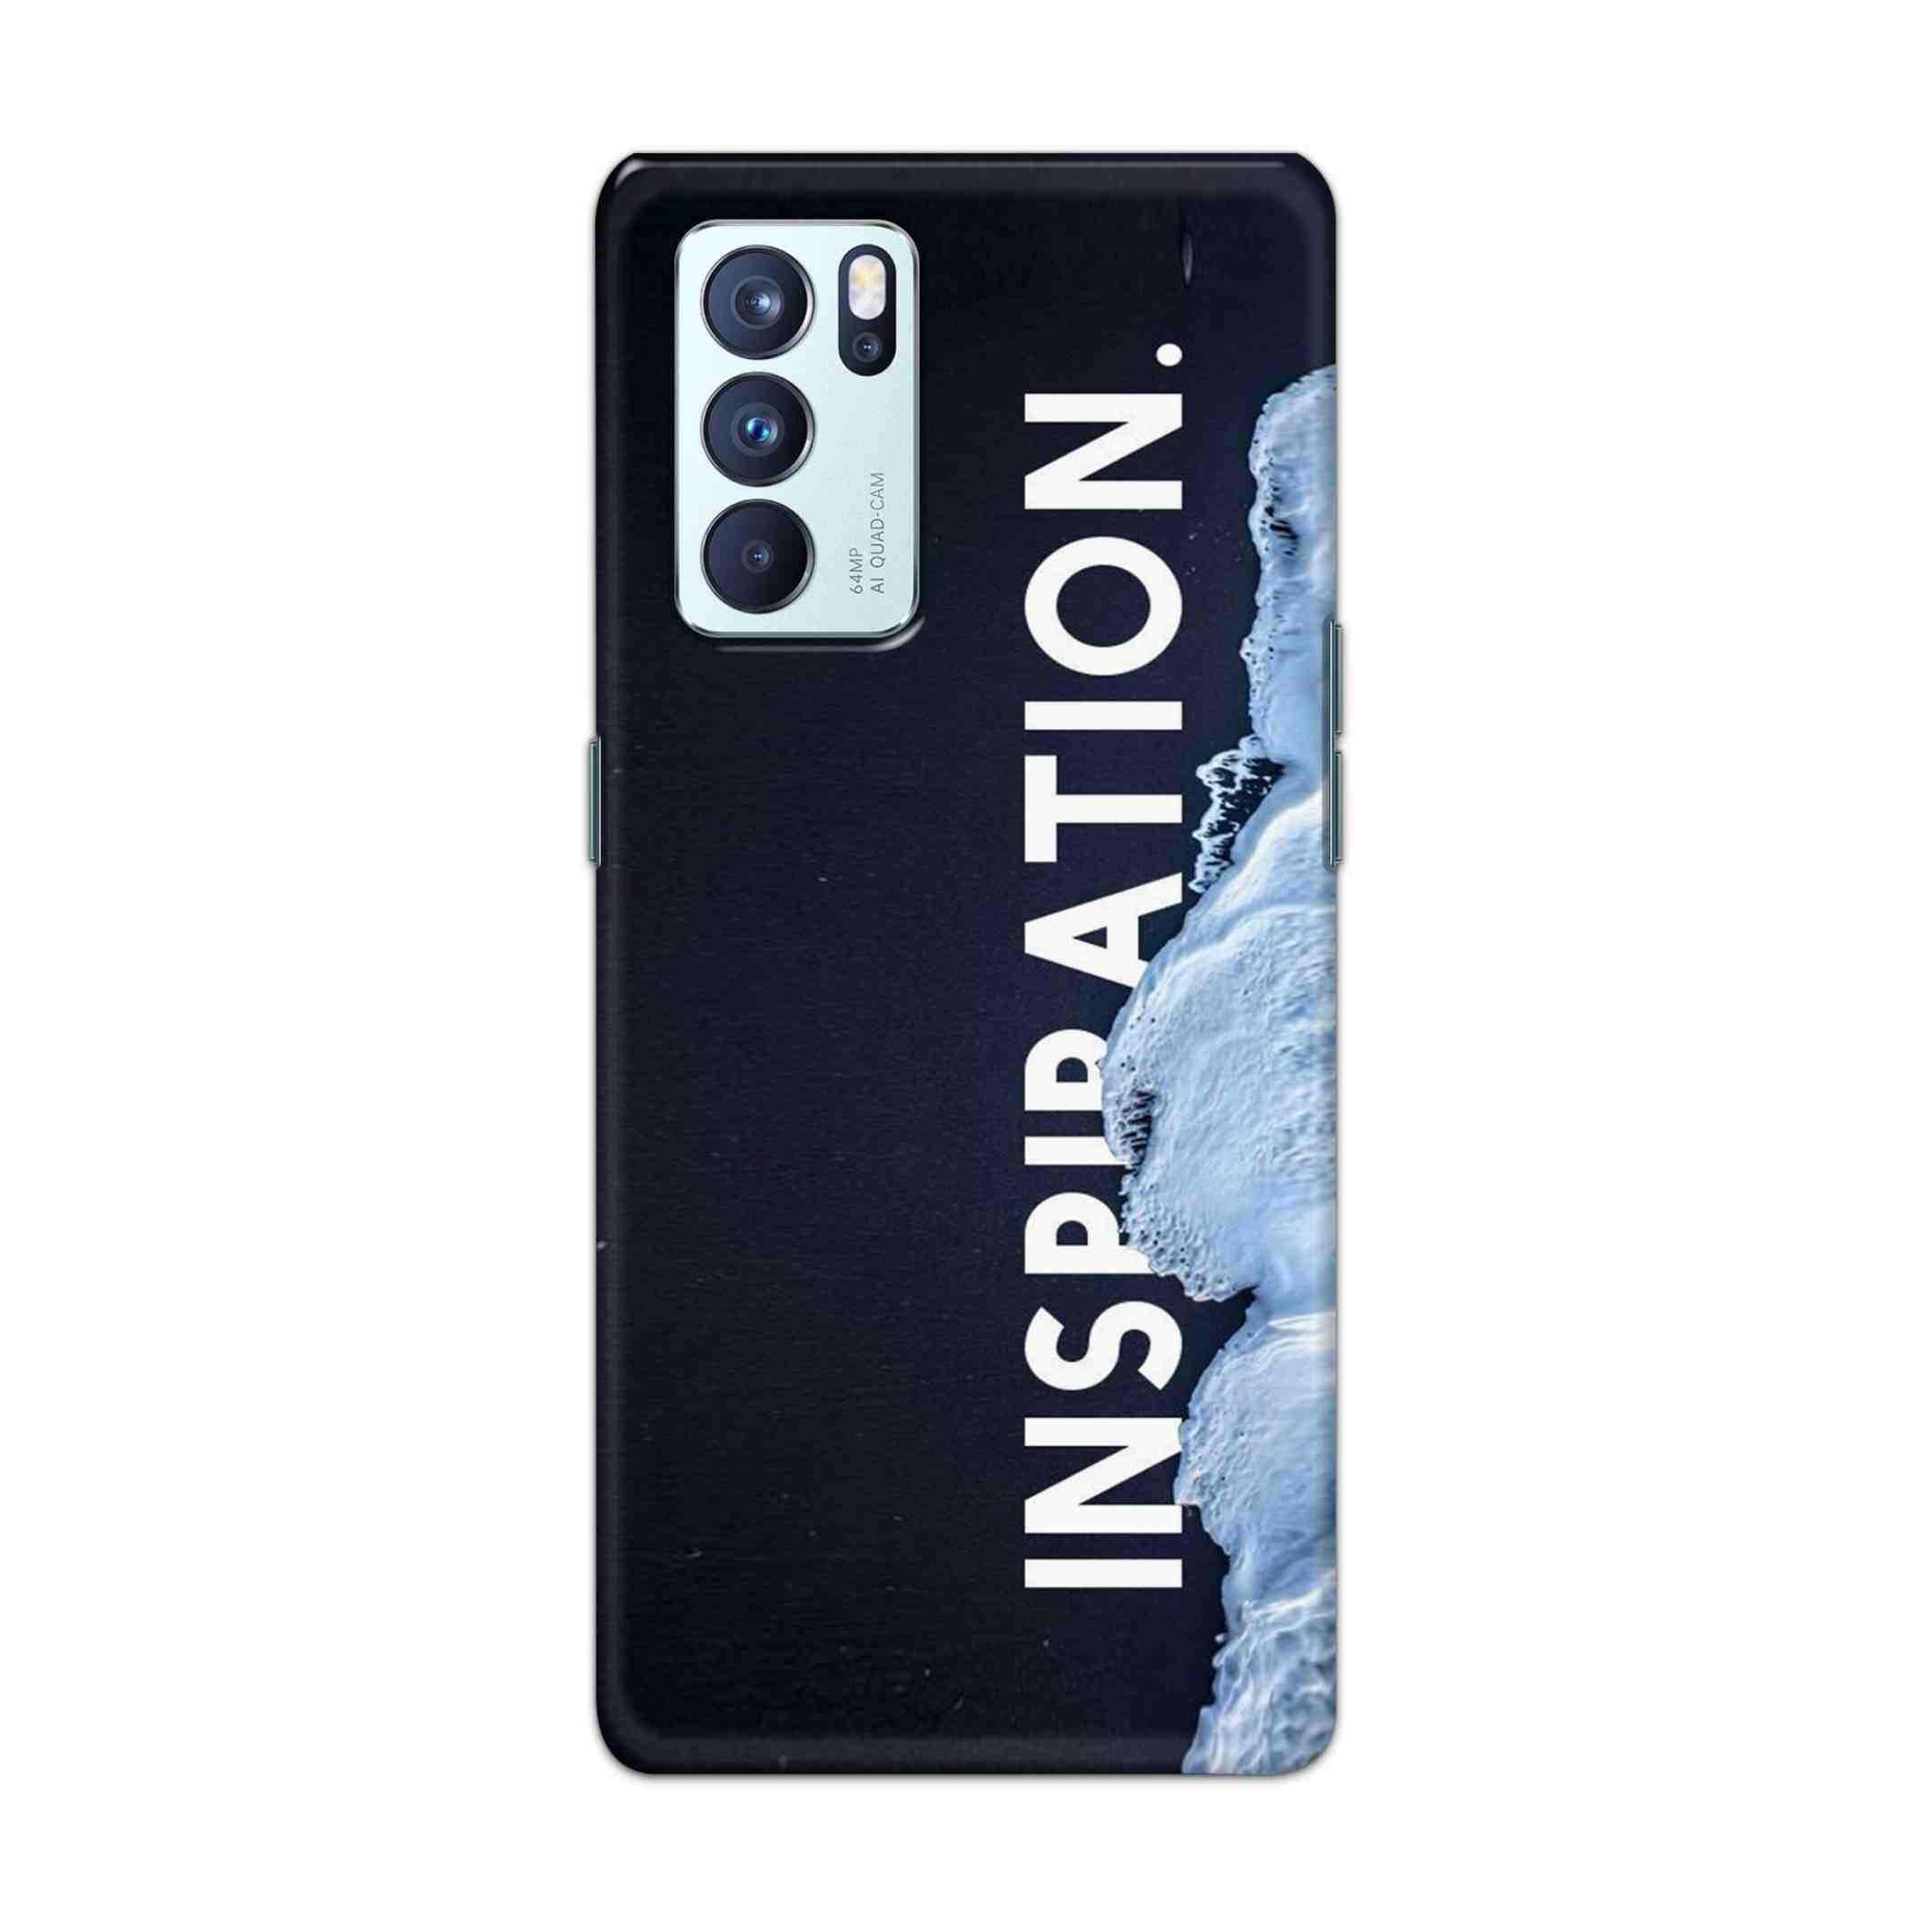 Buy Inspiration Hard Back Mobile Phone Case Cover For OPPO Reno 6 Pro 5G Online